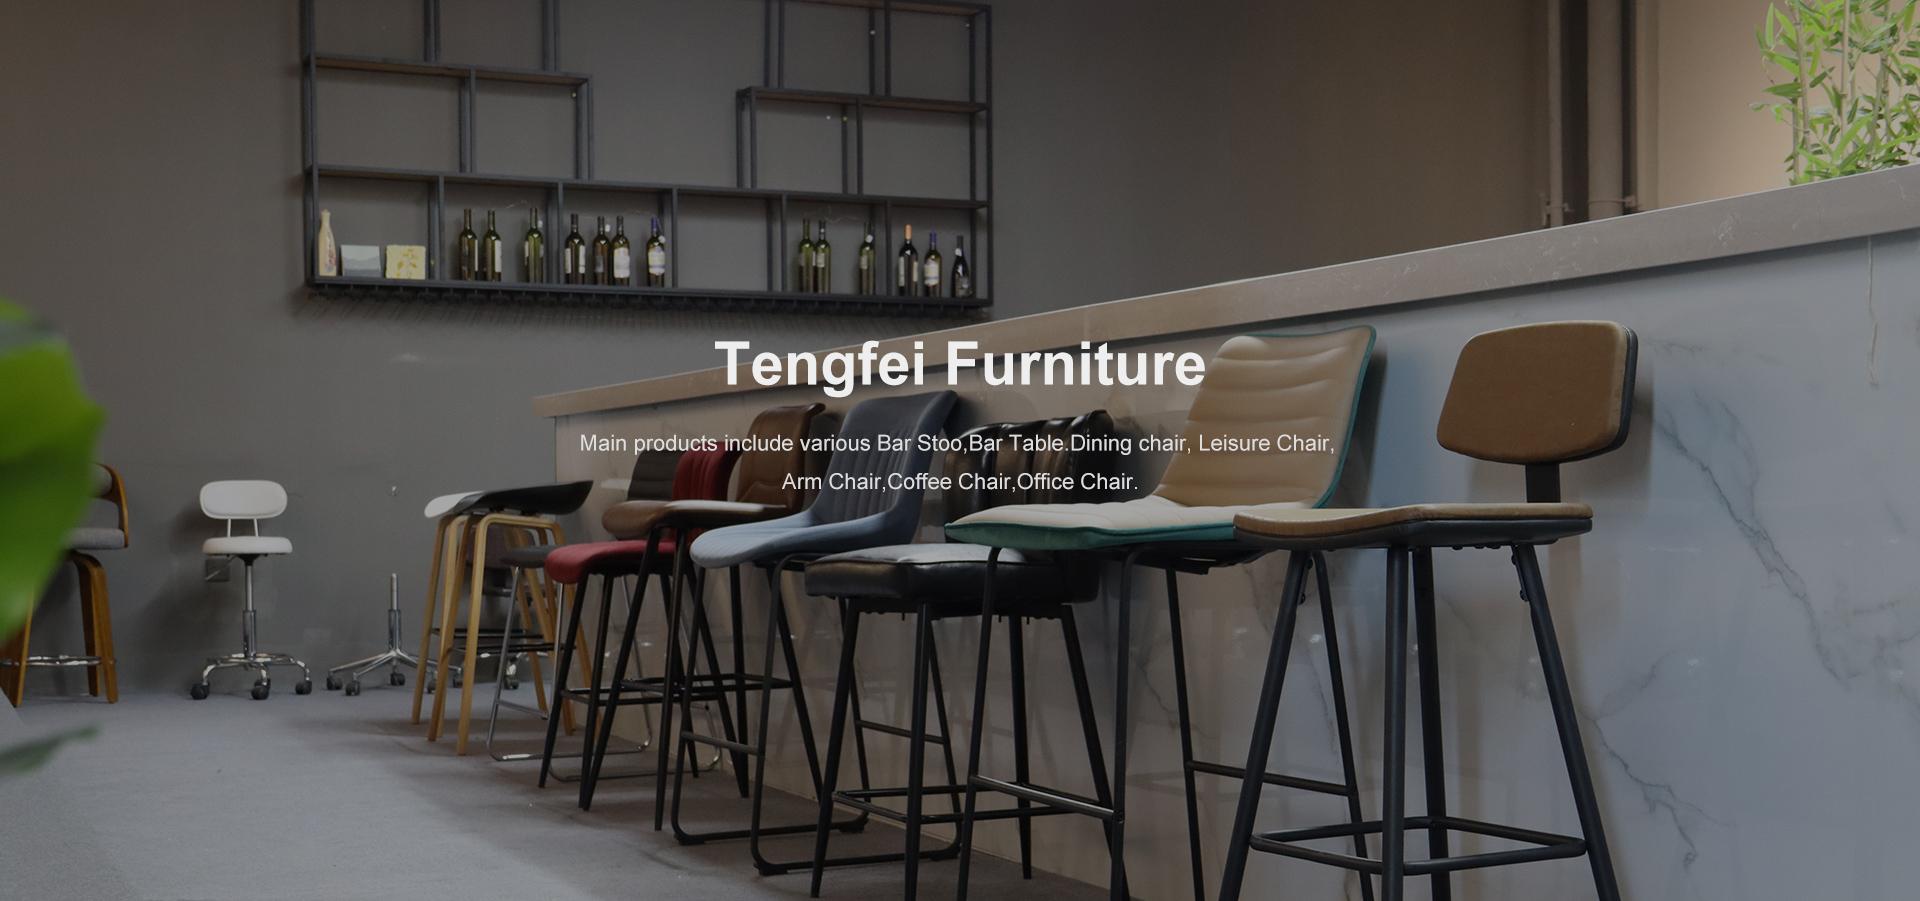 Tengfei Furniture